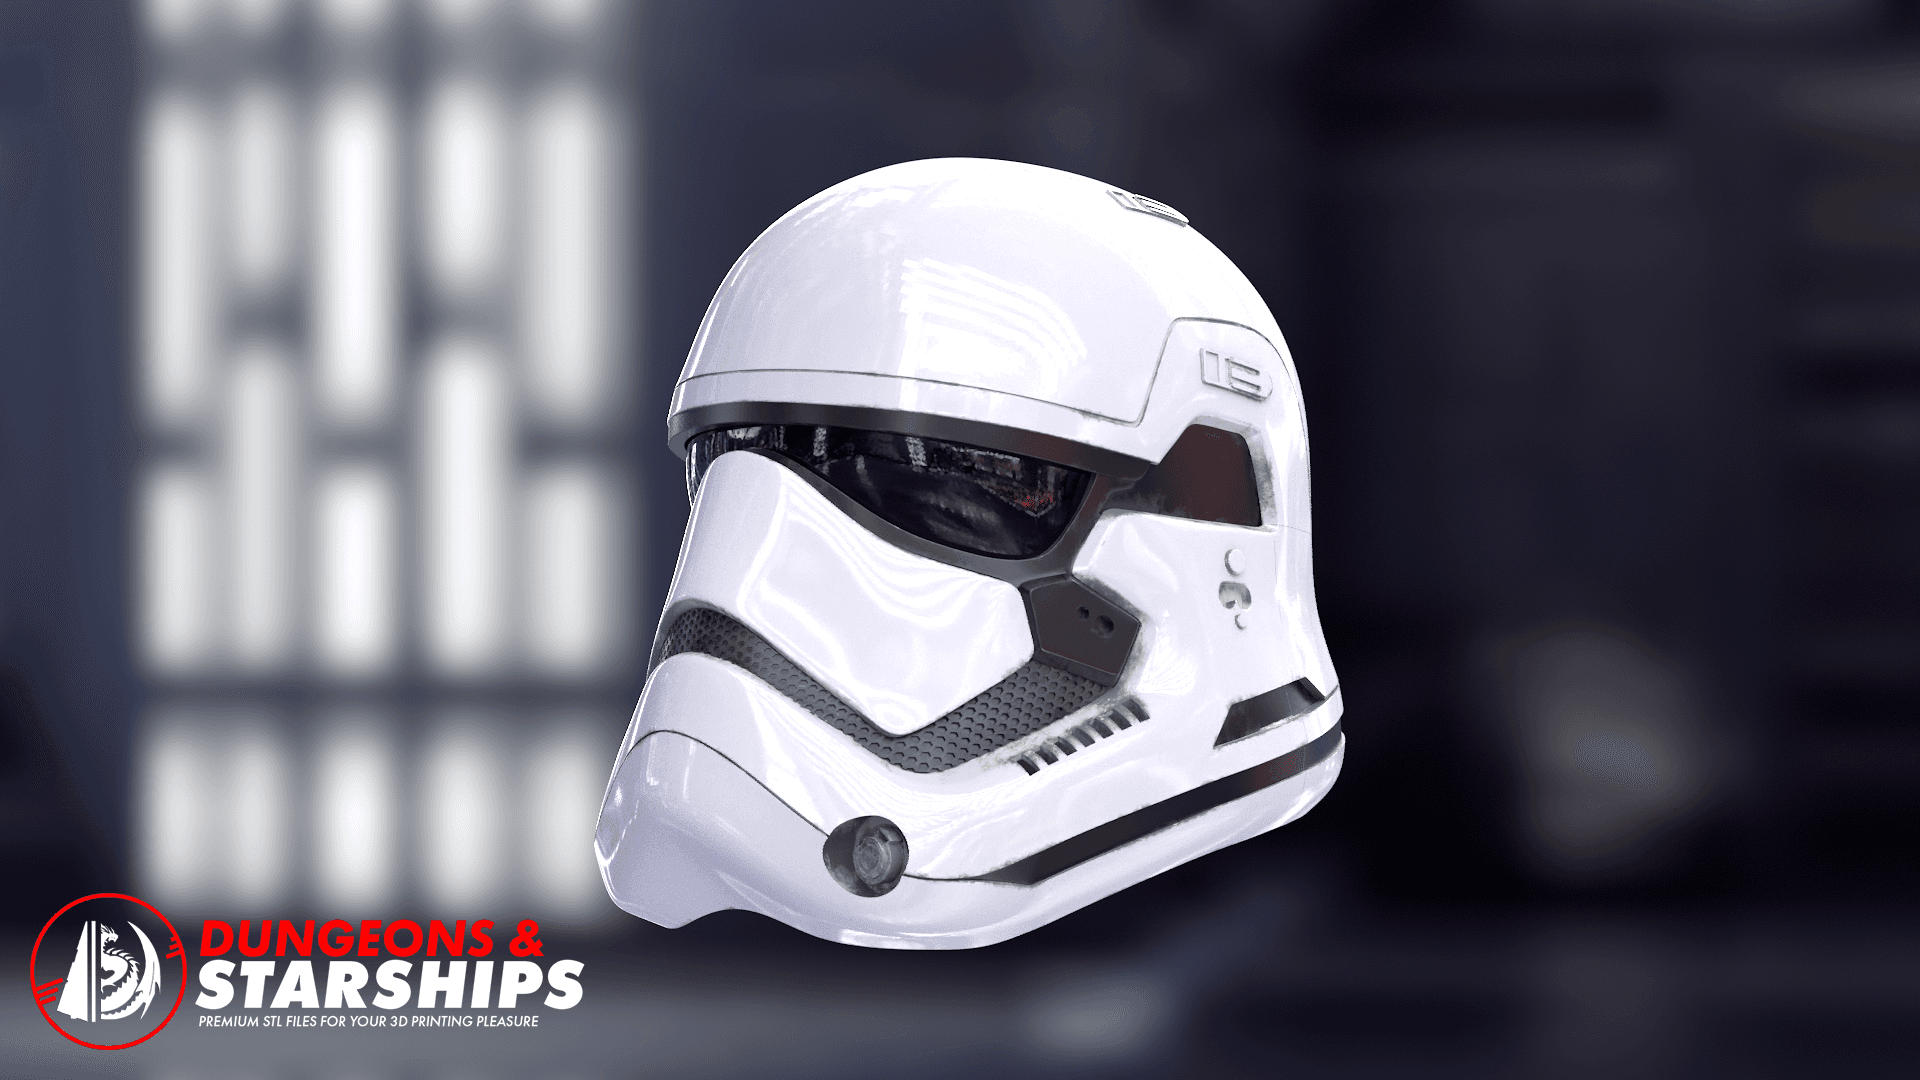 New File Alert - First Order Stormtrooper Helmet - The Force Awakens